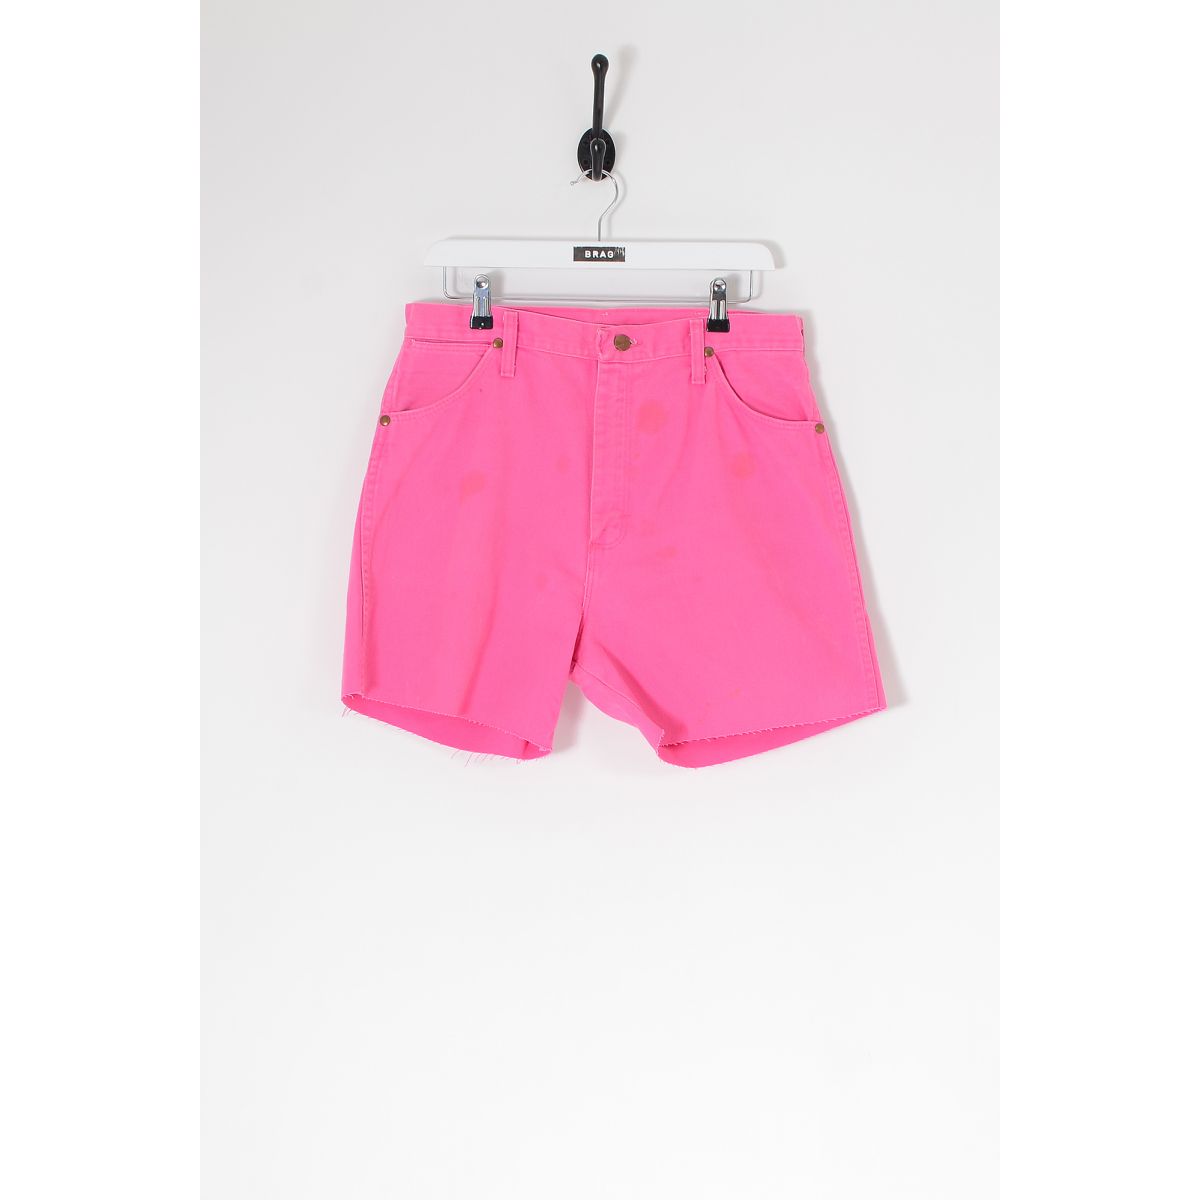 Vintage WRANGLER Denim Shorts Bright Pink W32